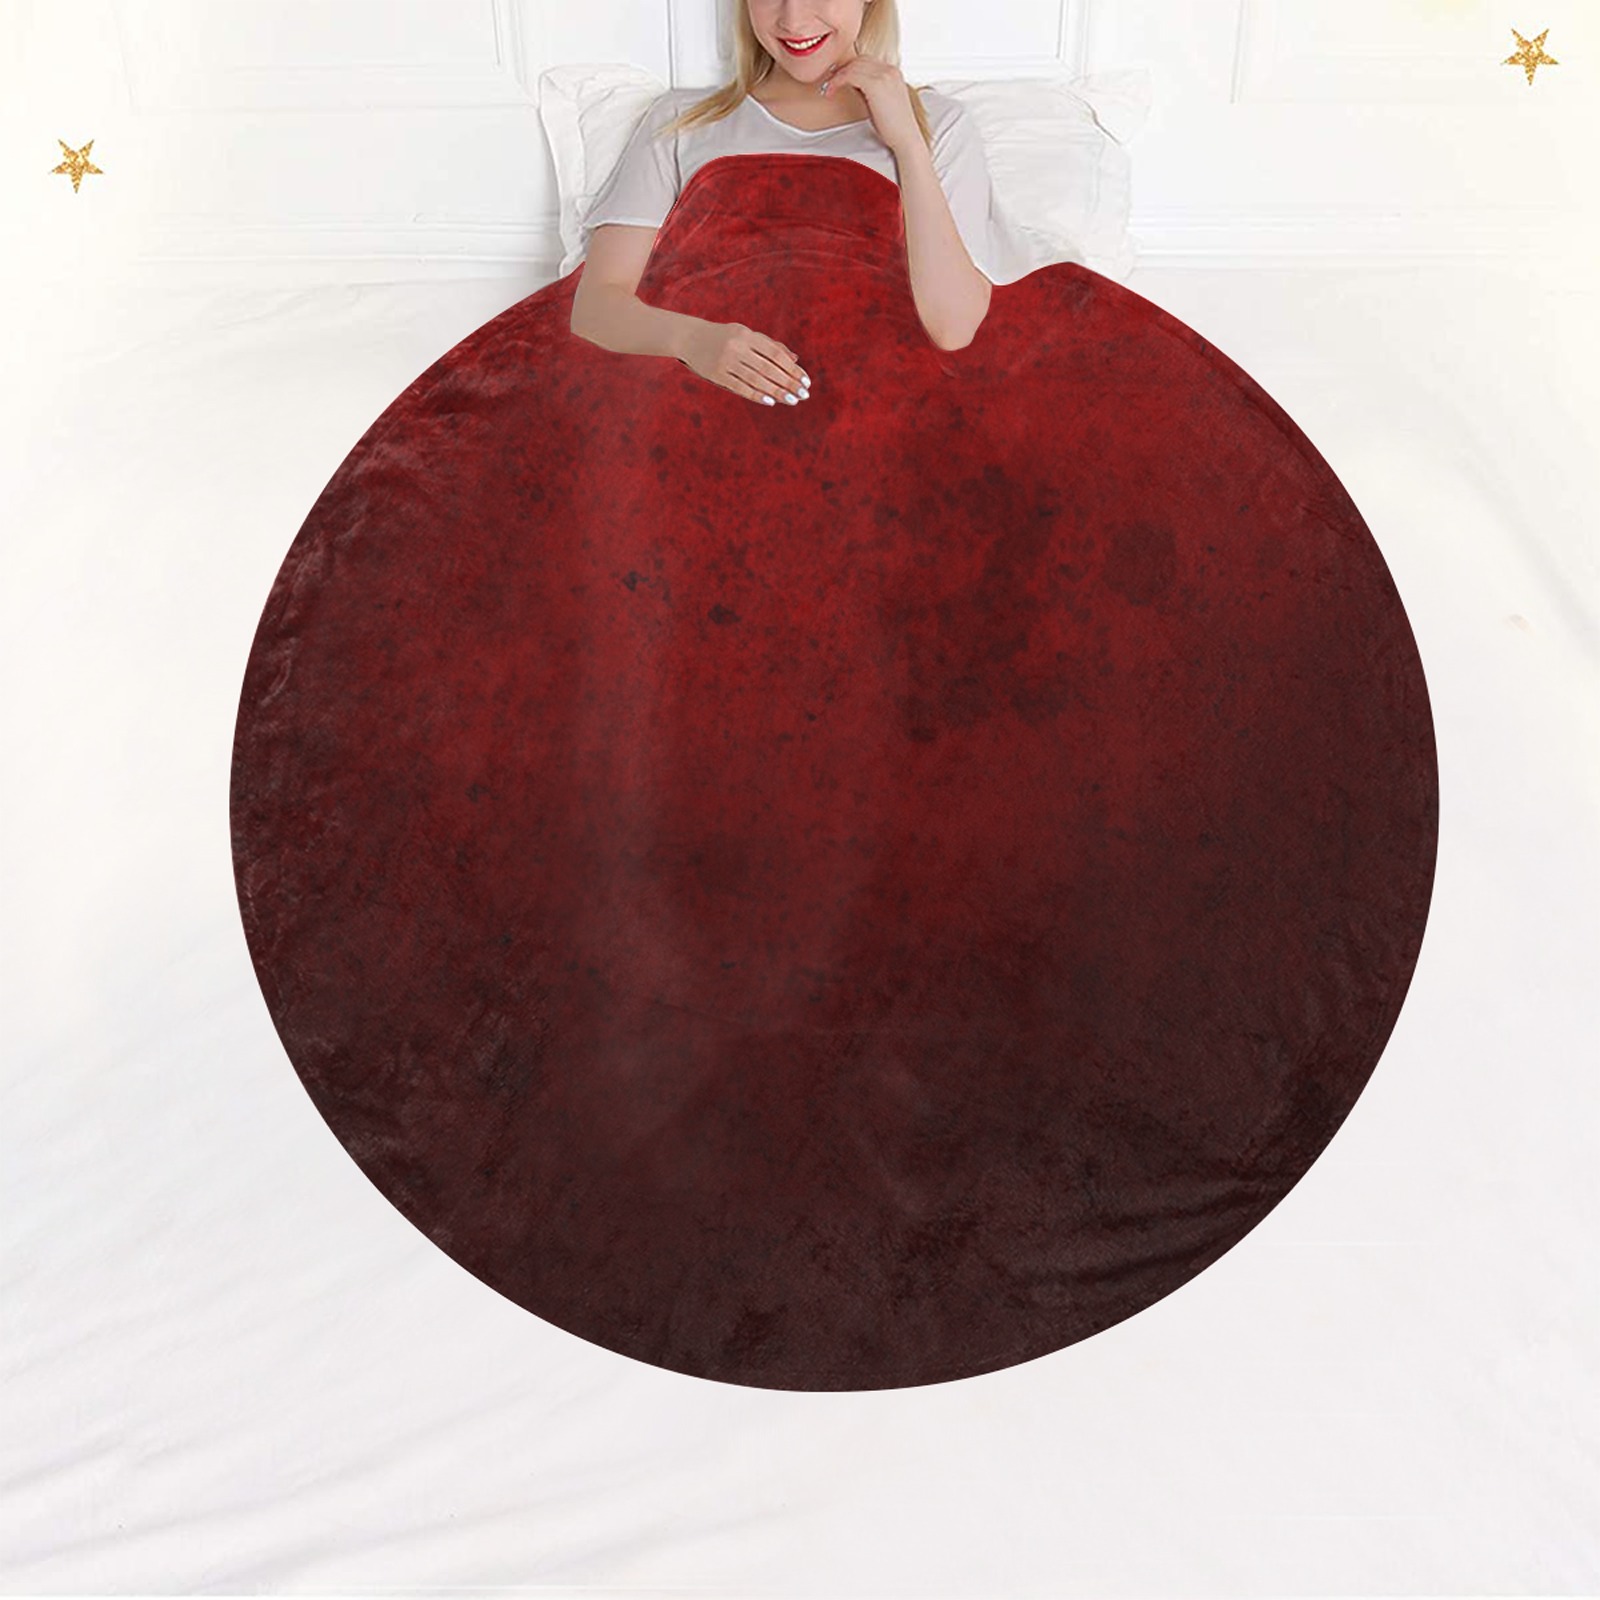 Red Mars Circular Ultra-Soft Micro Fleece Blanket 60"